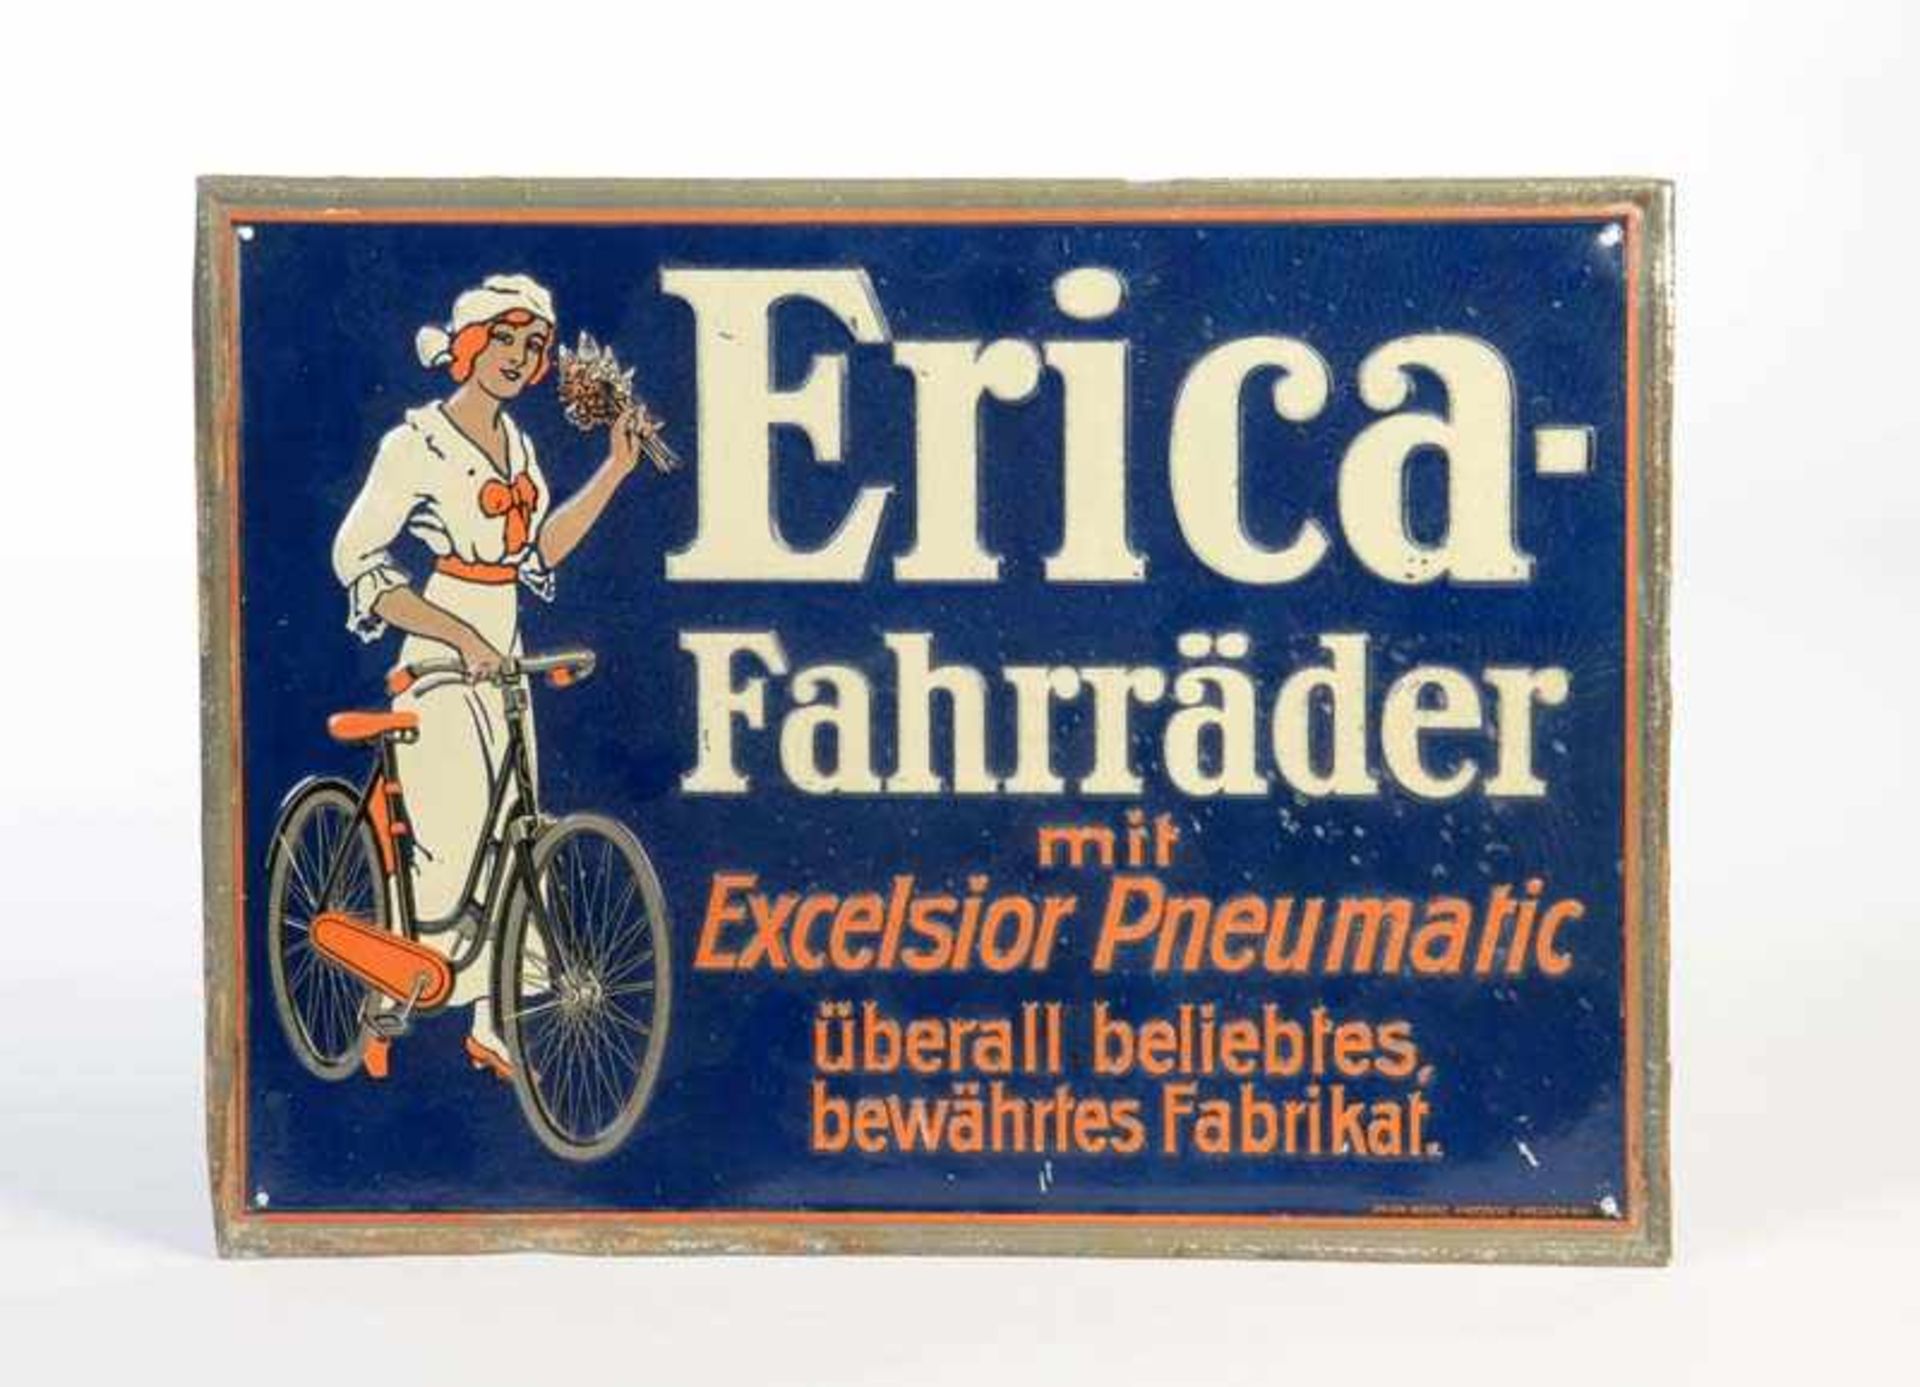 Blechschild "Erica Fahrräder", 31x41,5 cm, min. LM, Z 1-2Tin Plate Sign "Erica Fahrräder", min.